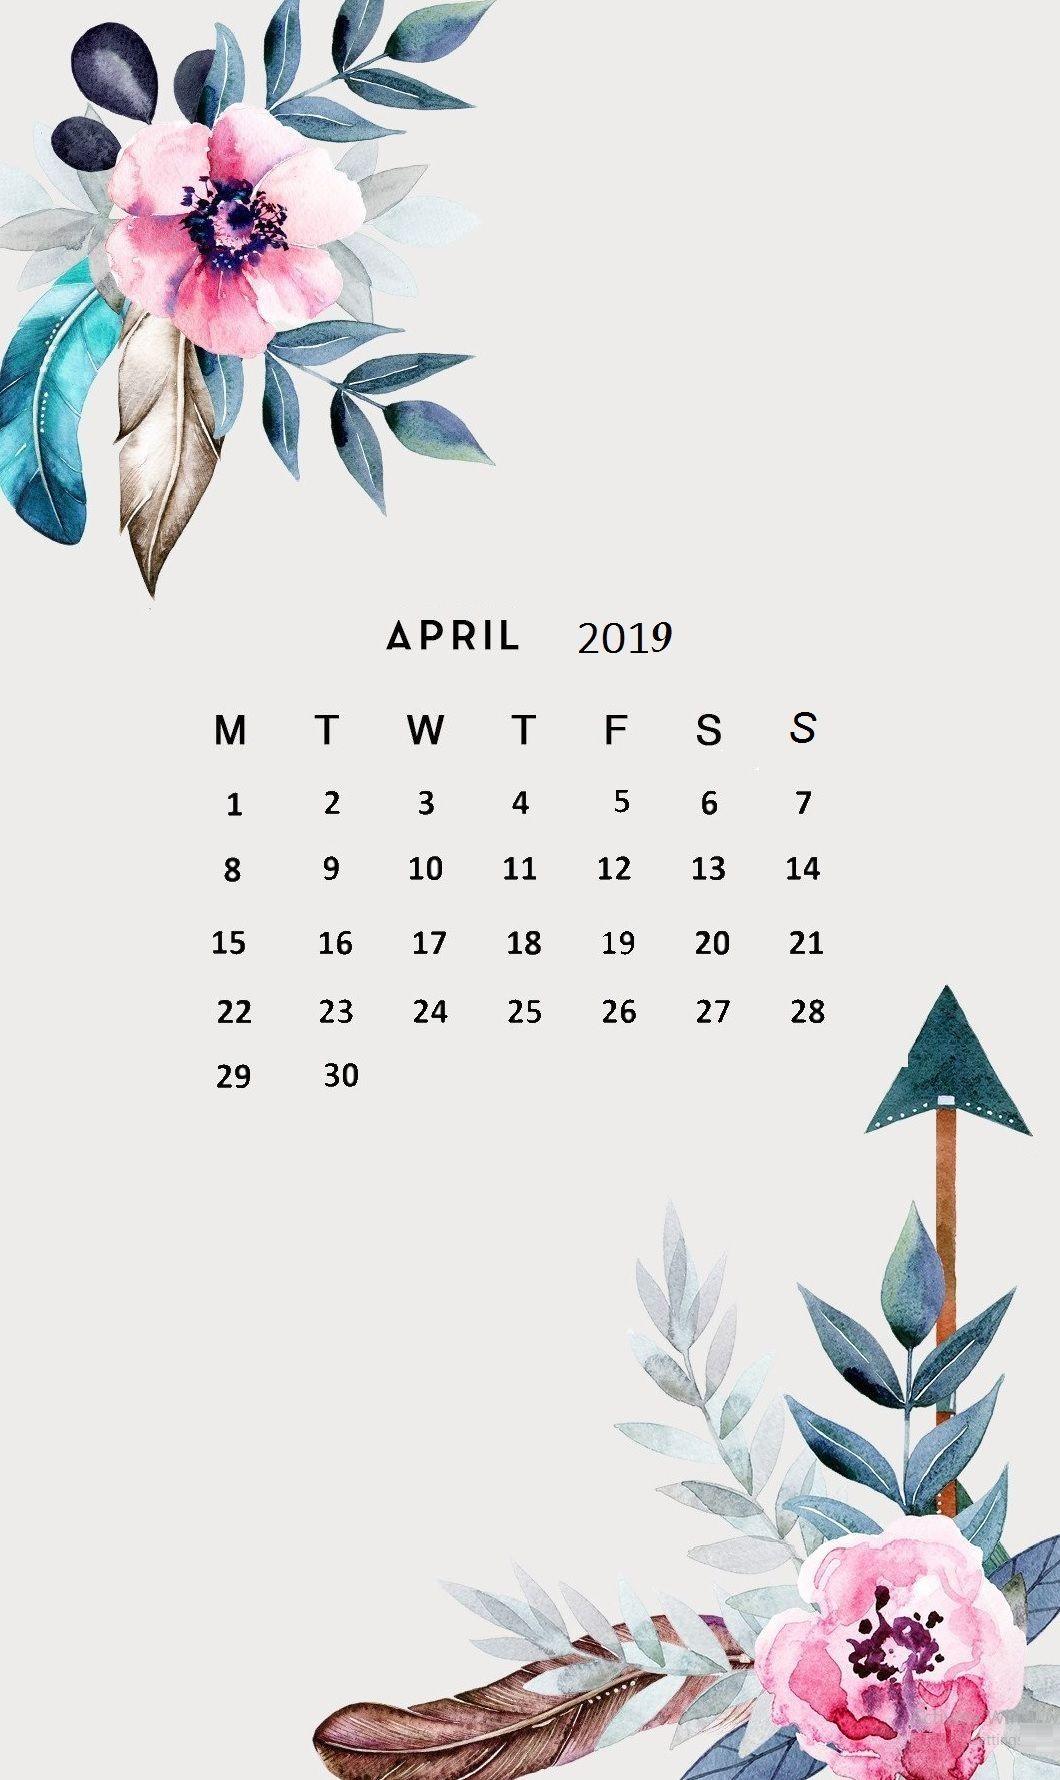 Flower April 2019 iPhone Wallpaper Calendar. Background. in 2019